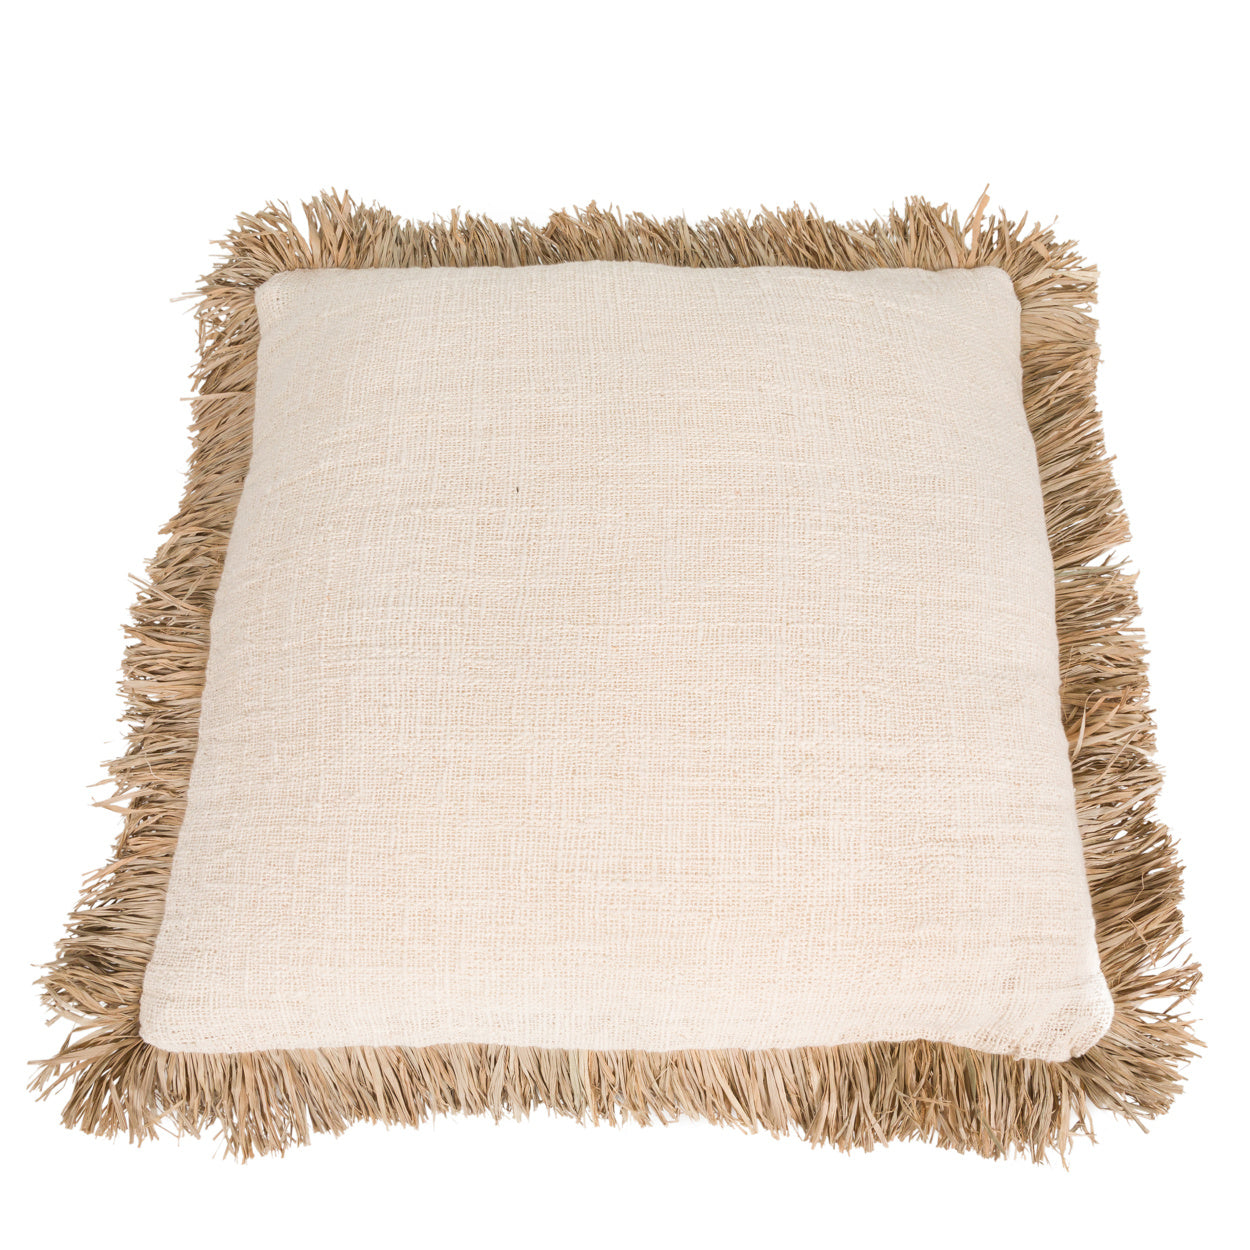 THE SAINT TROPEZ Cushion Cover Natural-White 60x60 cm front view